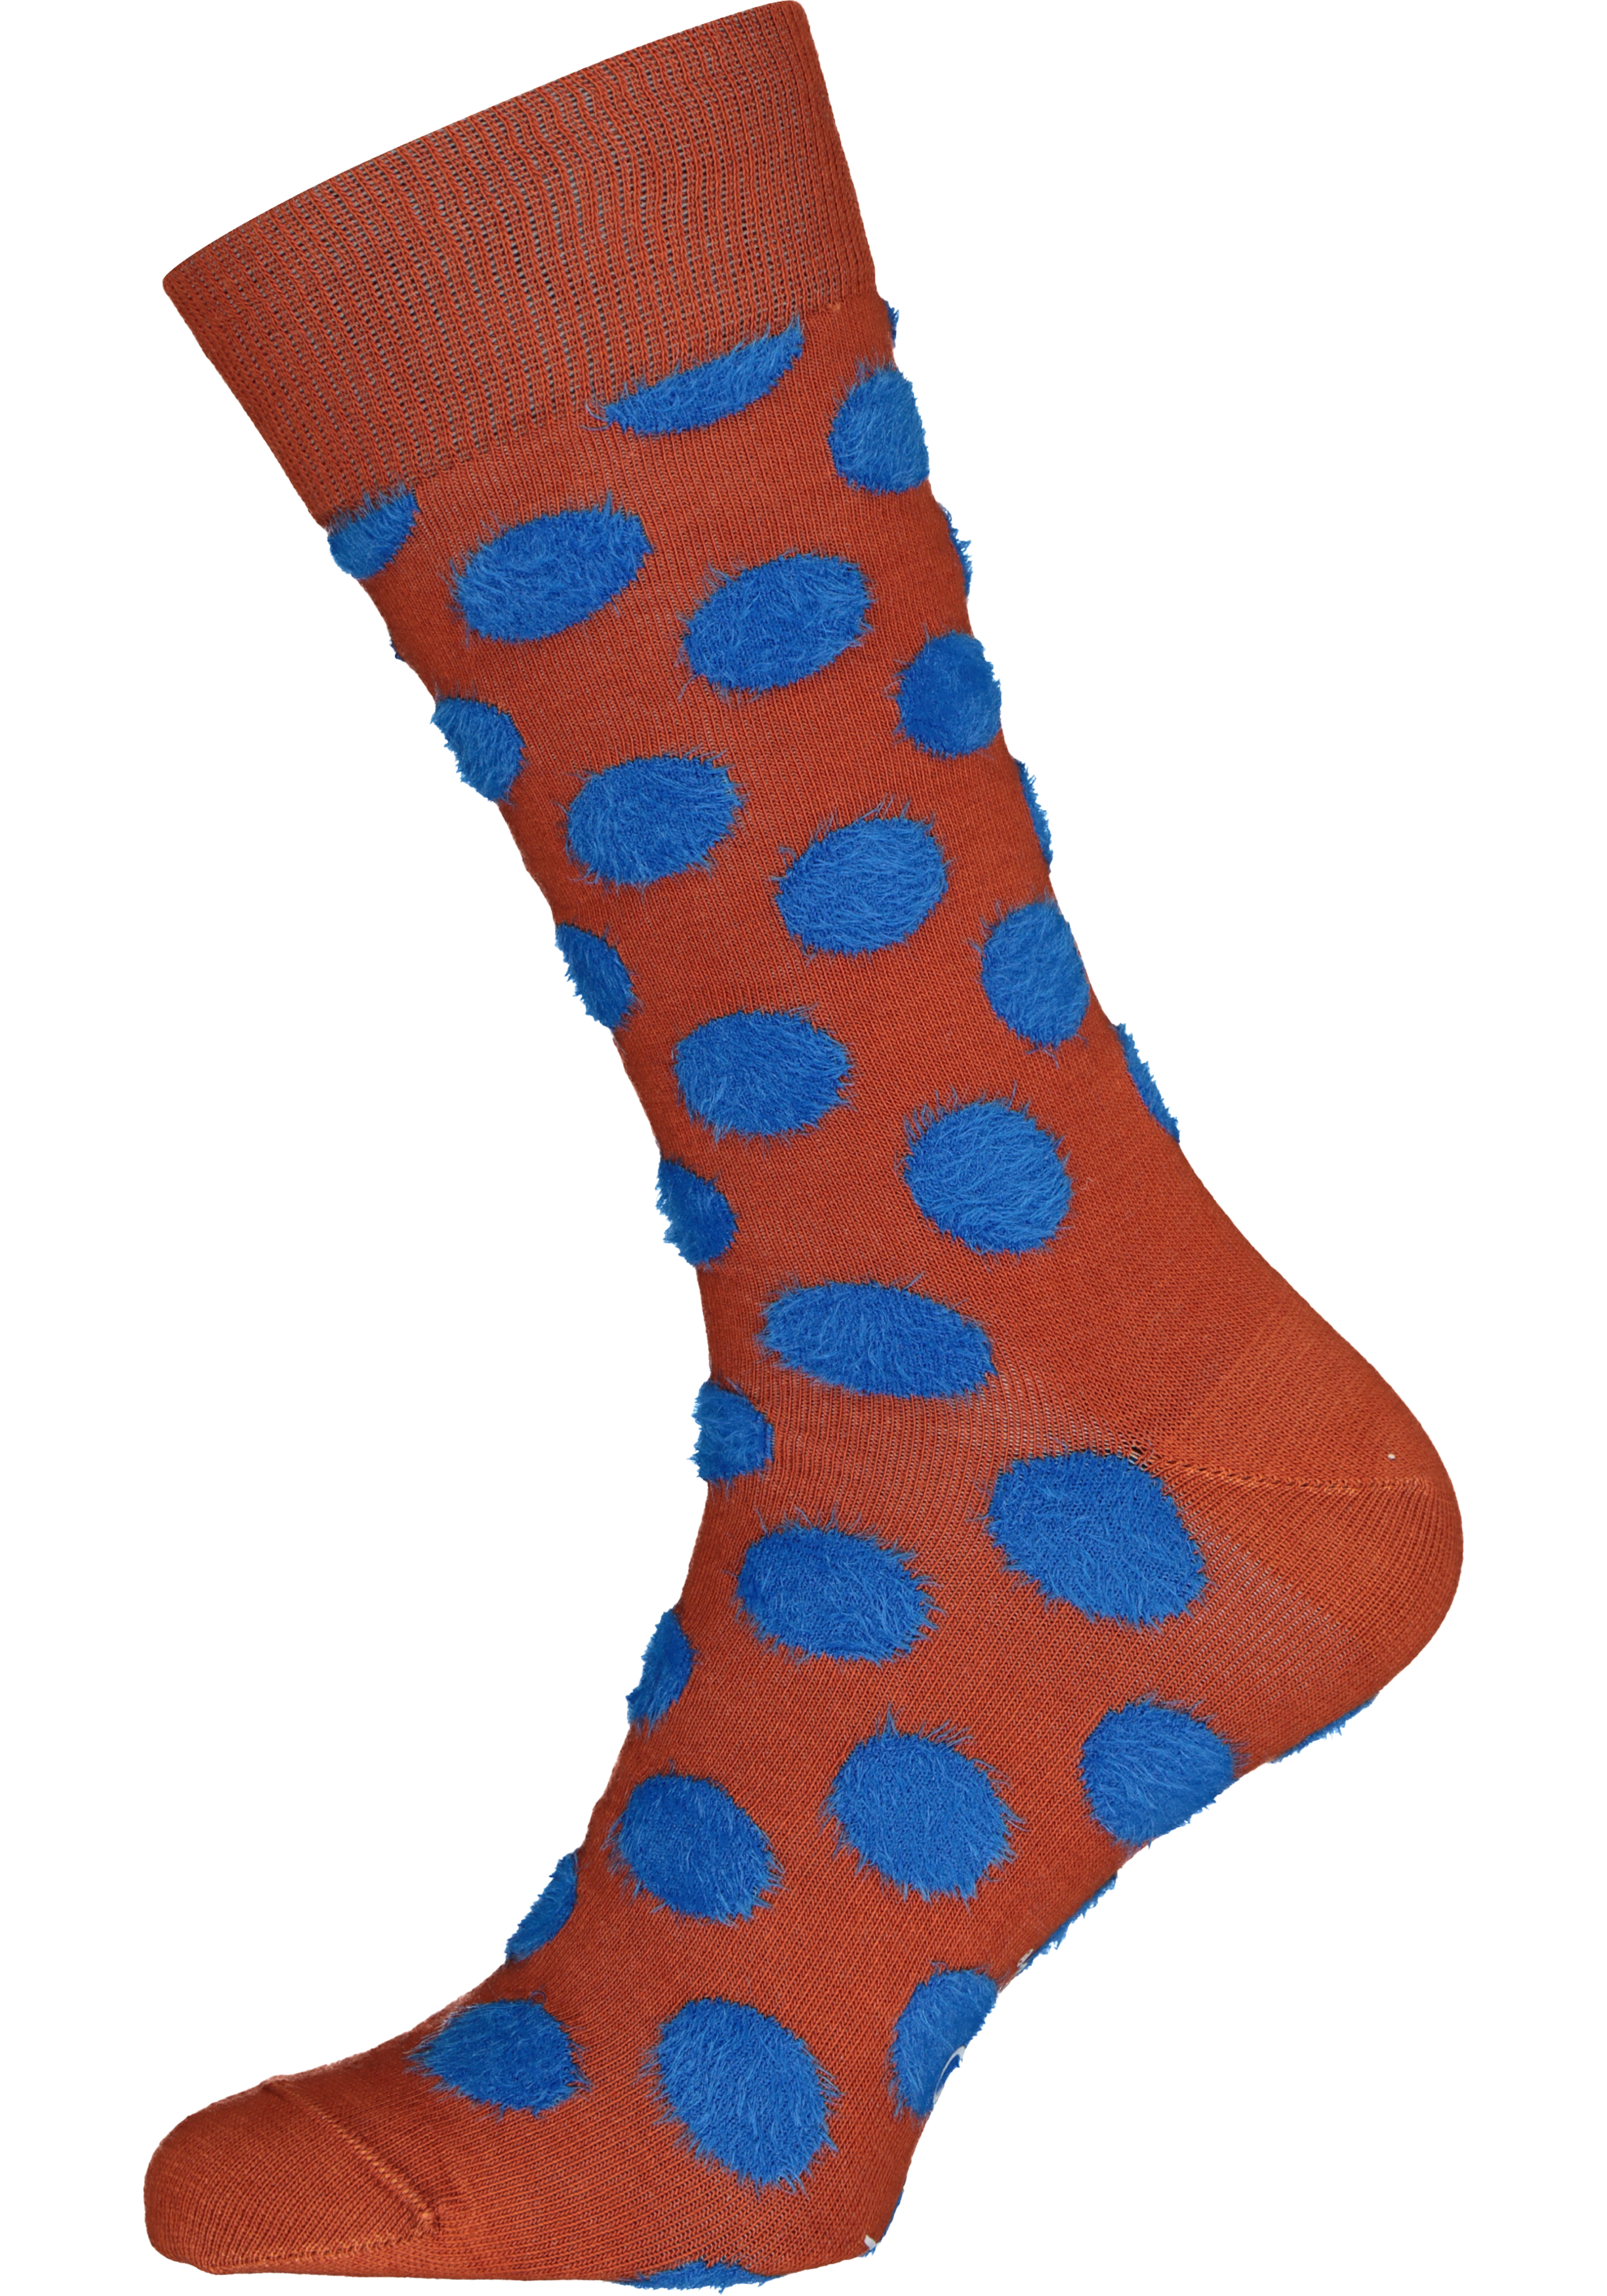 Happy Socks Big Dot Sock, roestbruin met zachte stippen